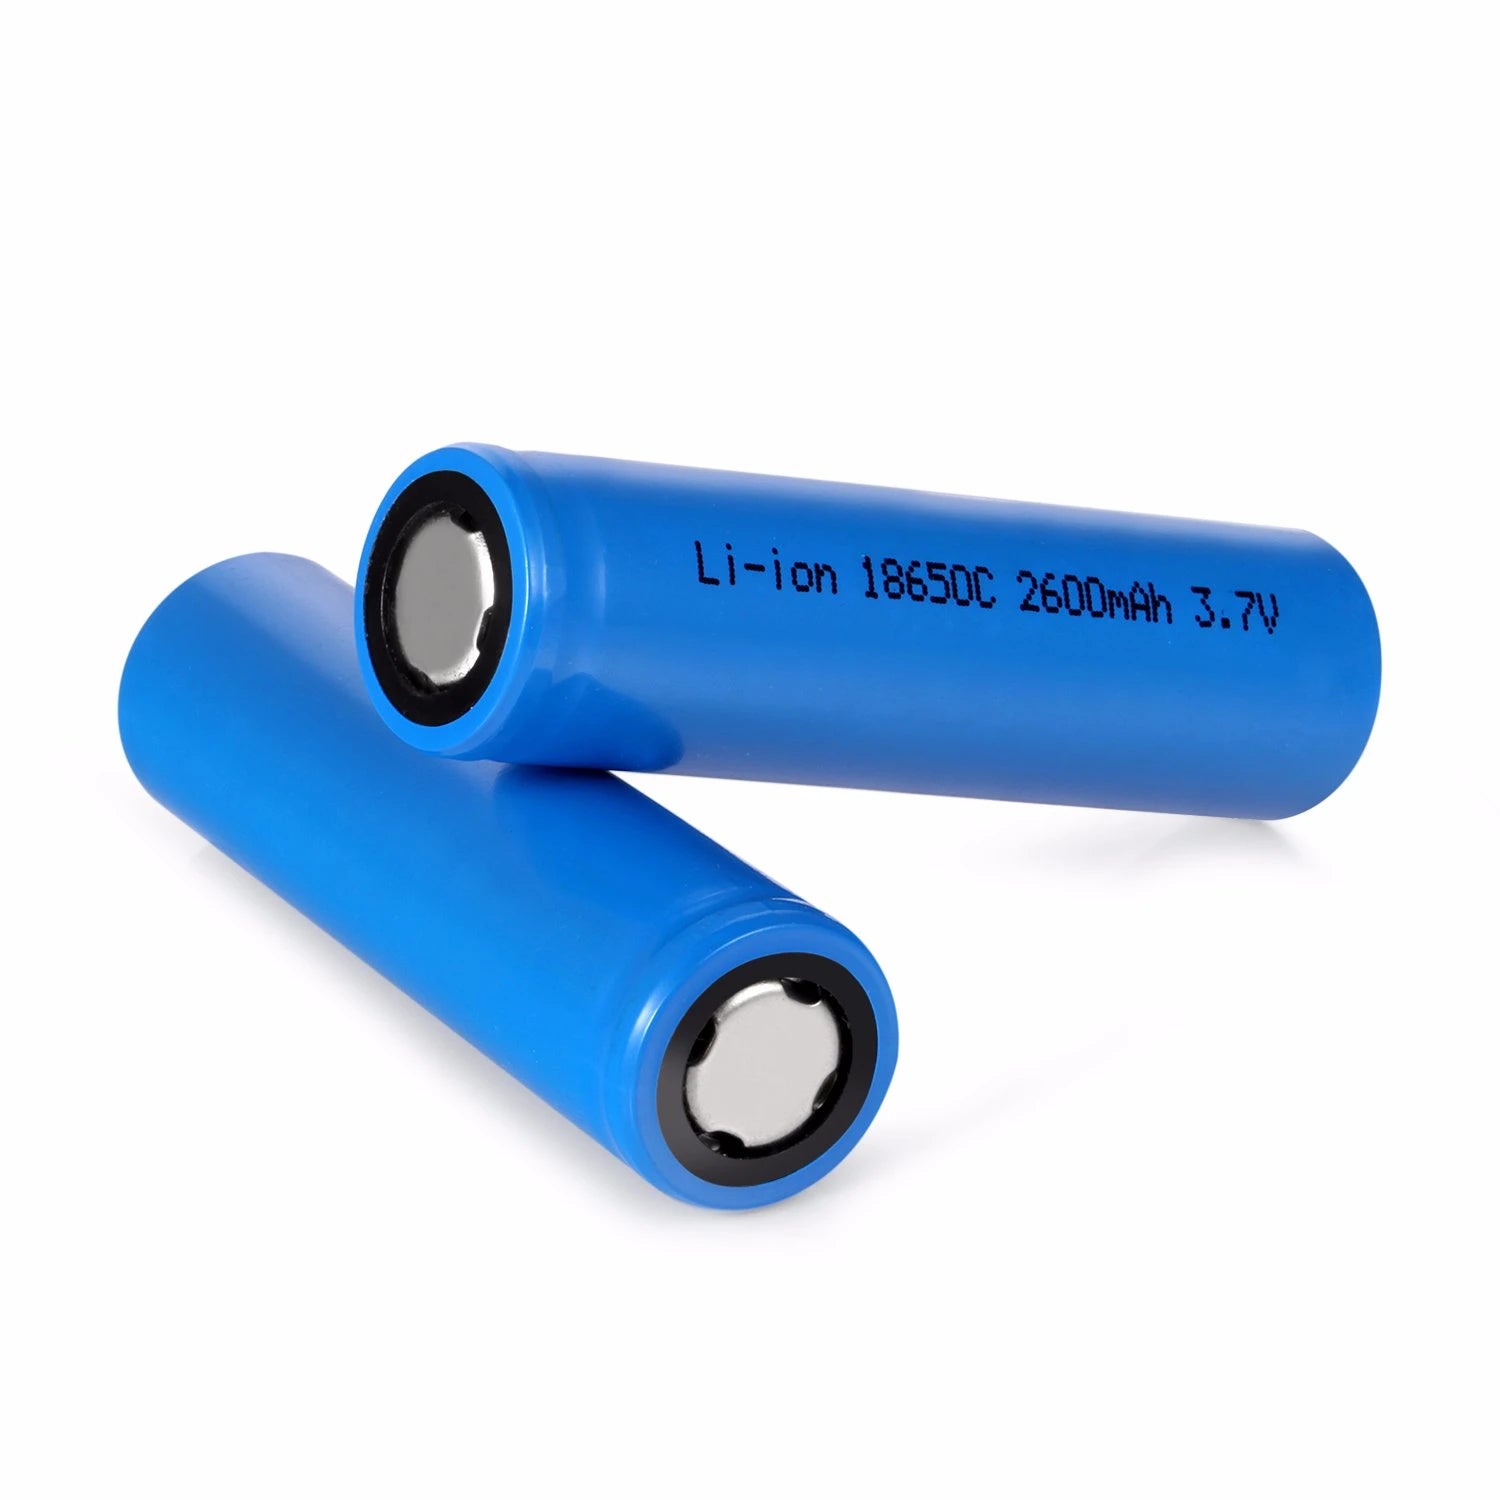 Rechargeable Li-Ion battery Icr 18650 2600mAh 3.7V - 7.4V Battery Pack